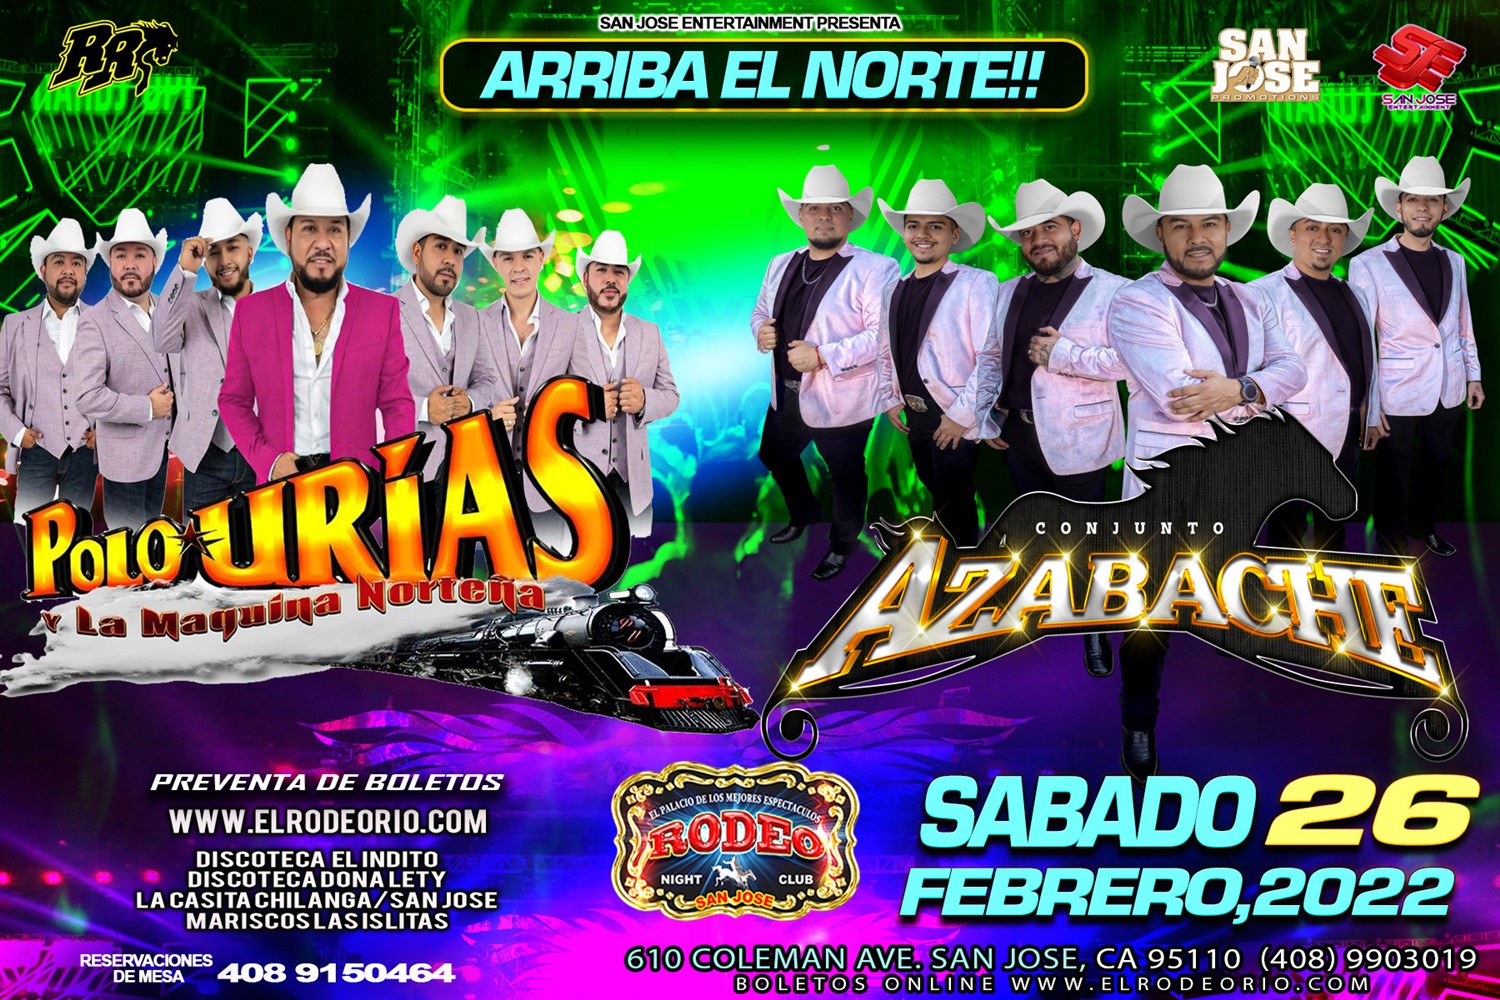 Polo Urias y Conjunto Azabache,Club Rodeo de San Jose  on feb. 26, 21:00@Club Rodeo - Buy tickets and Get information on elrodeorio.com sanjoseentertainment